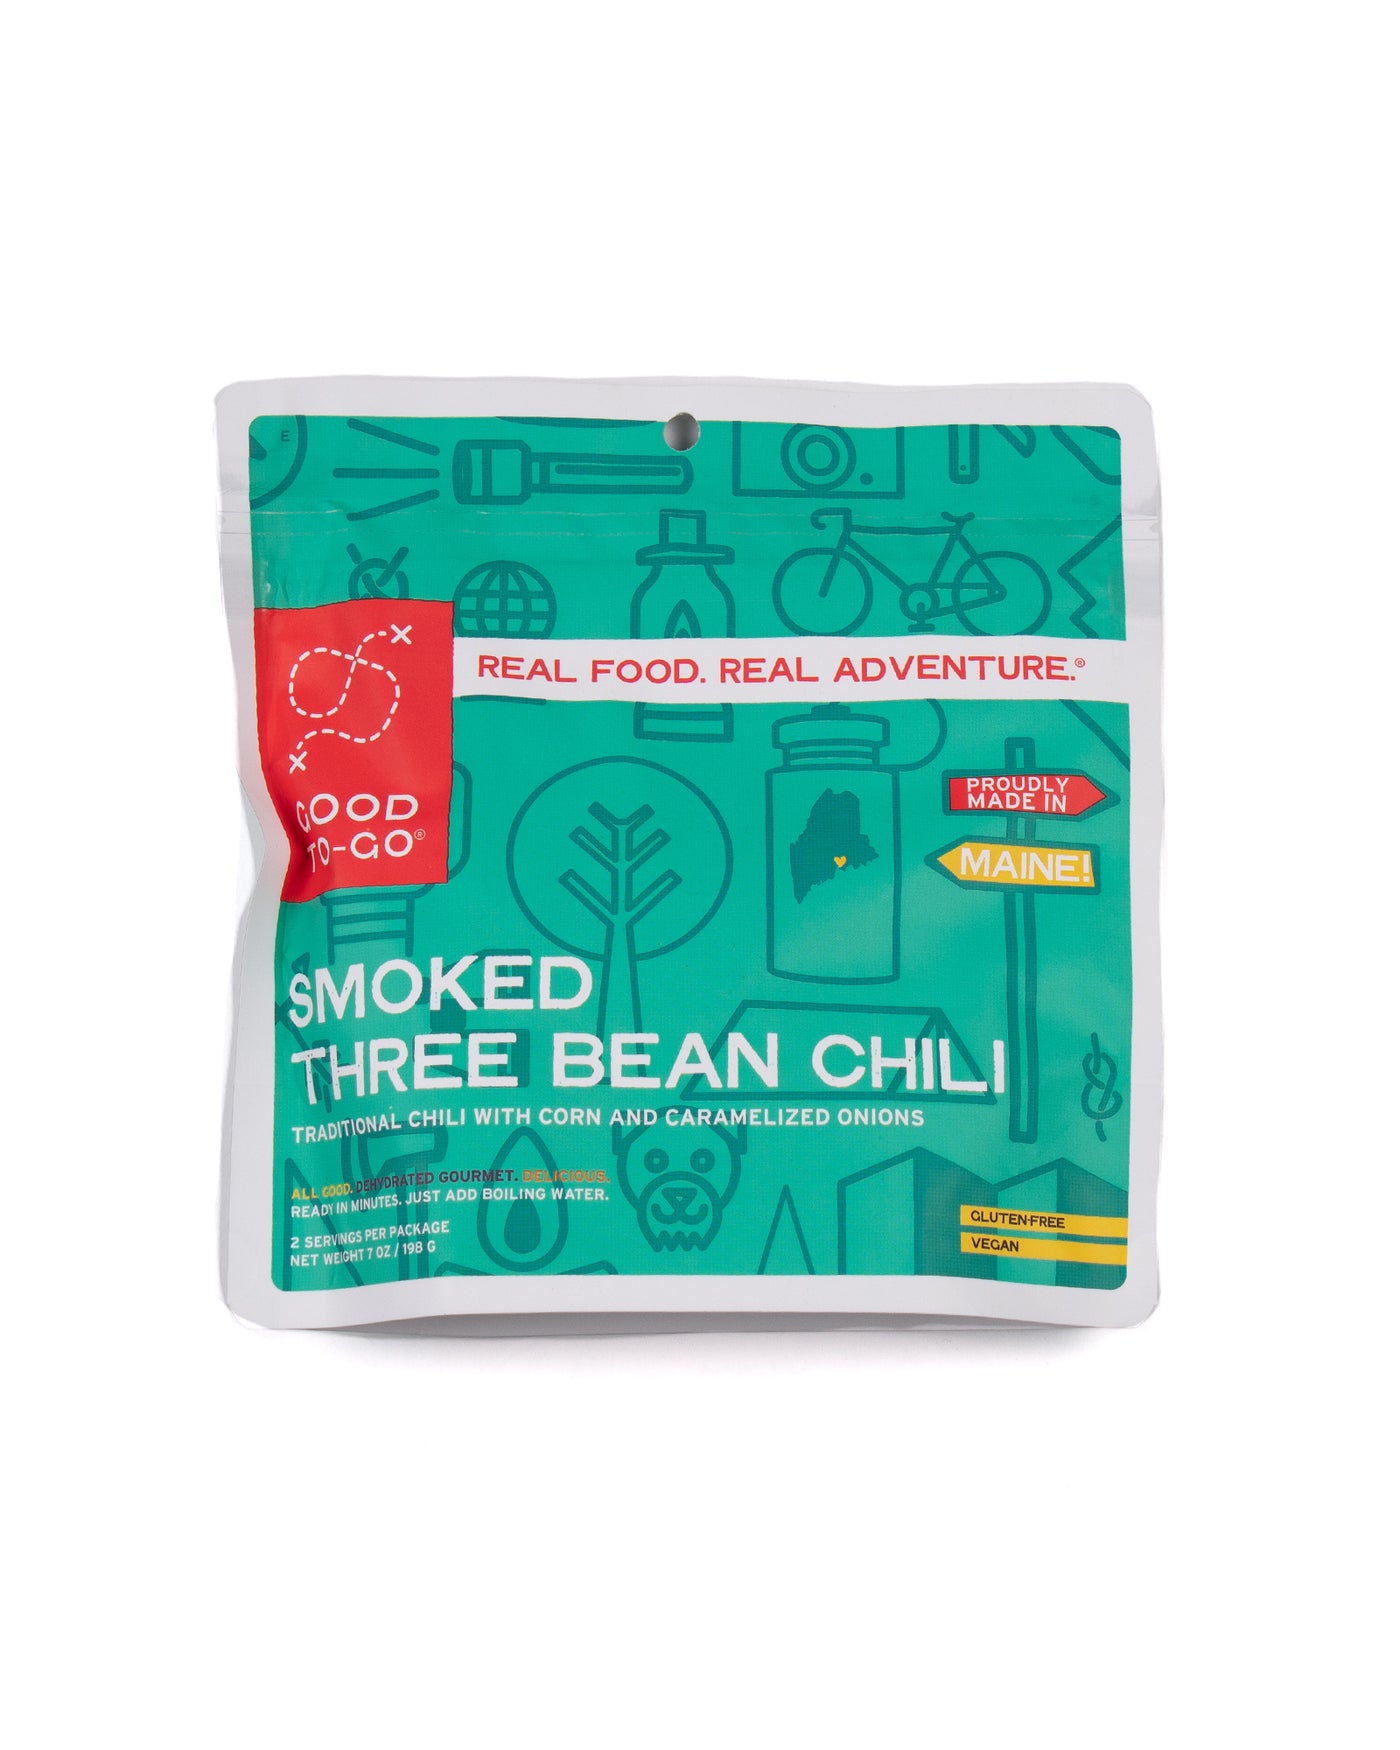 Smoked 3 Bean Chili - 2 Servings